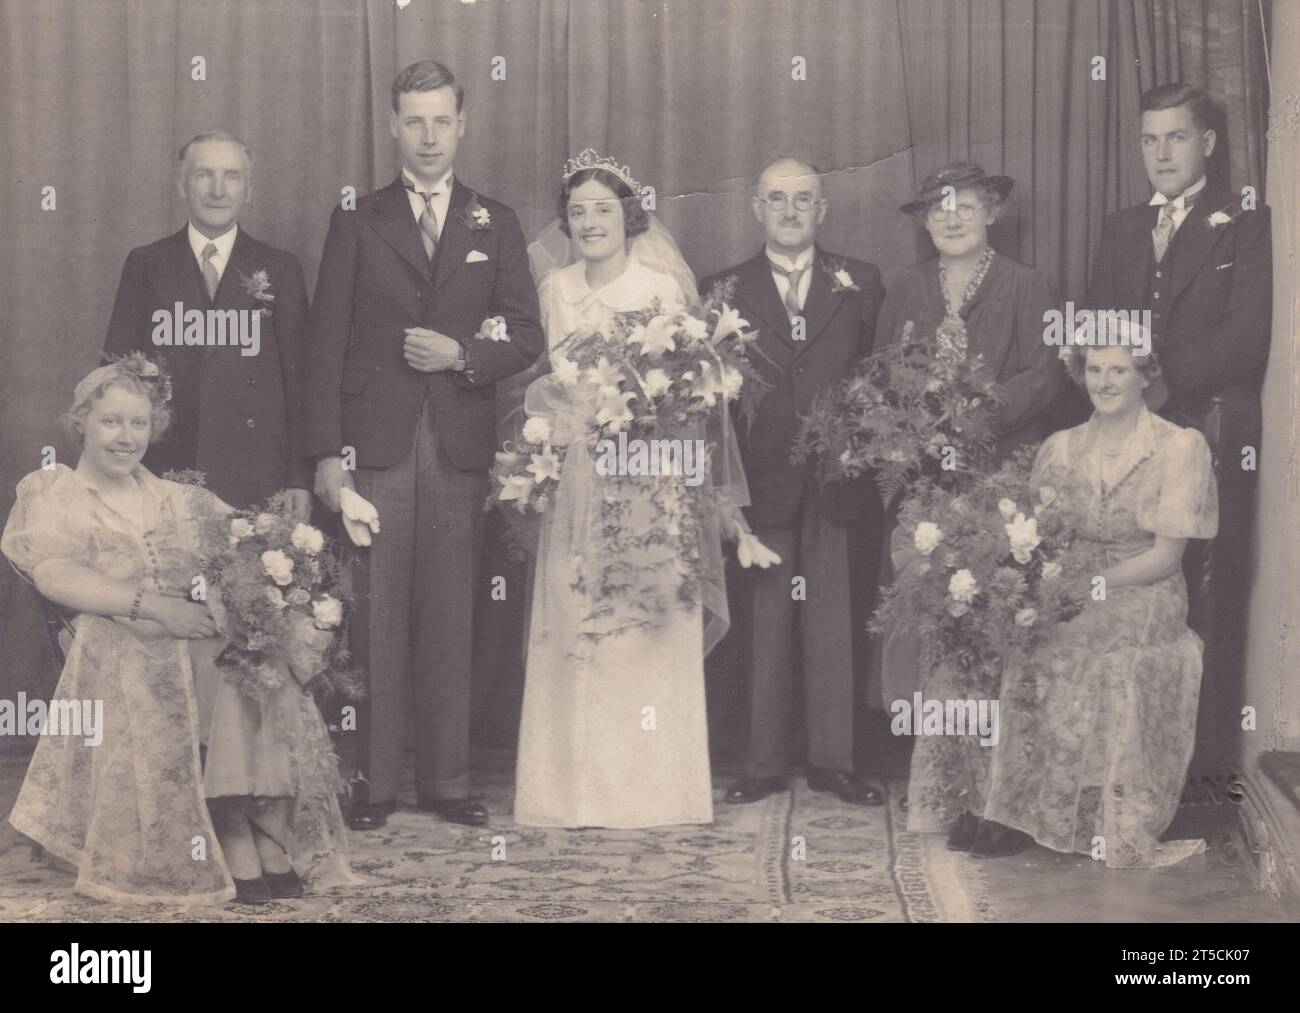 Vintage black and white wedding photo 1930s / 1940s? Stock Photo